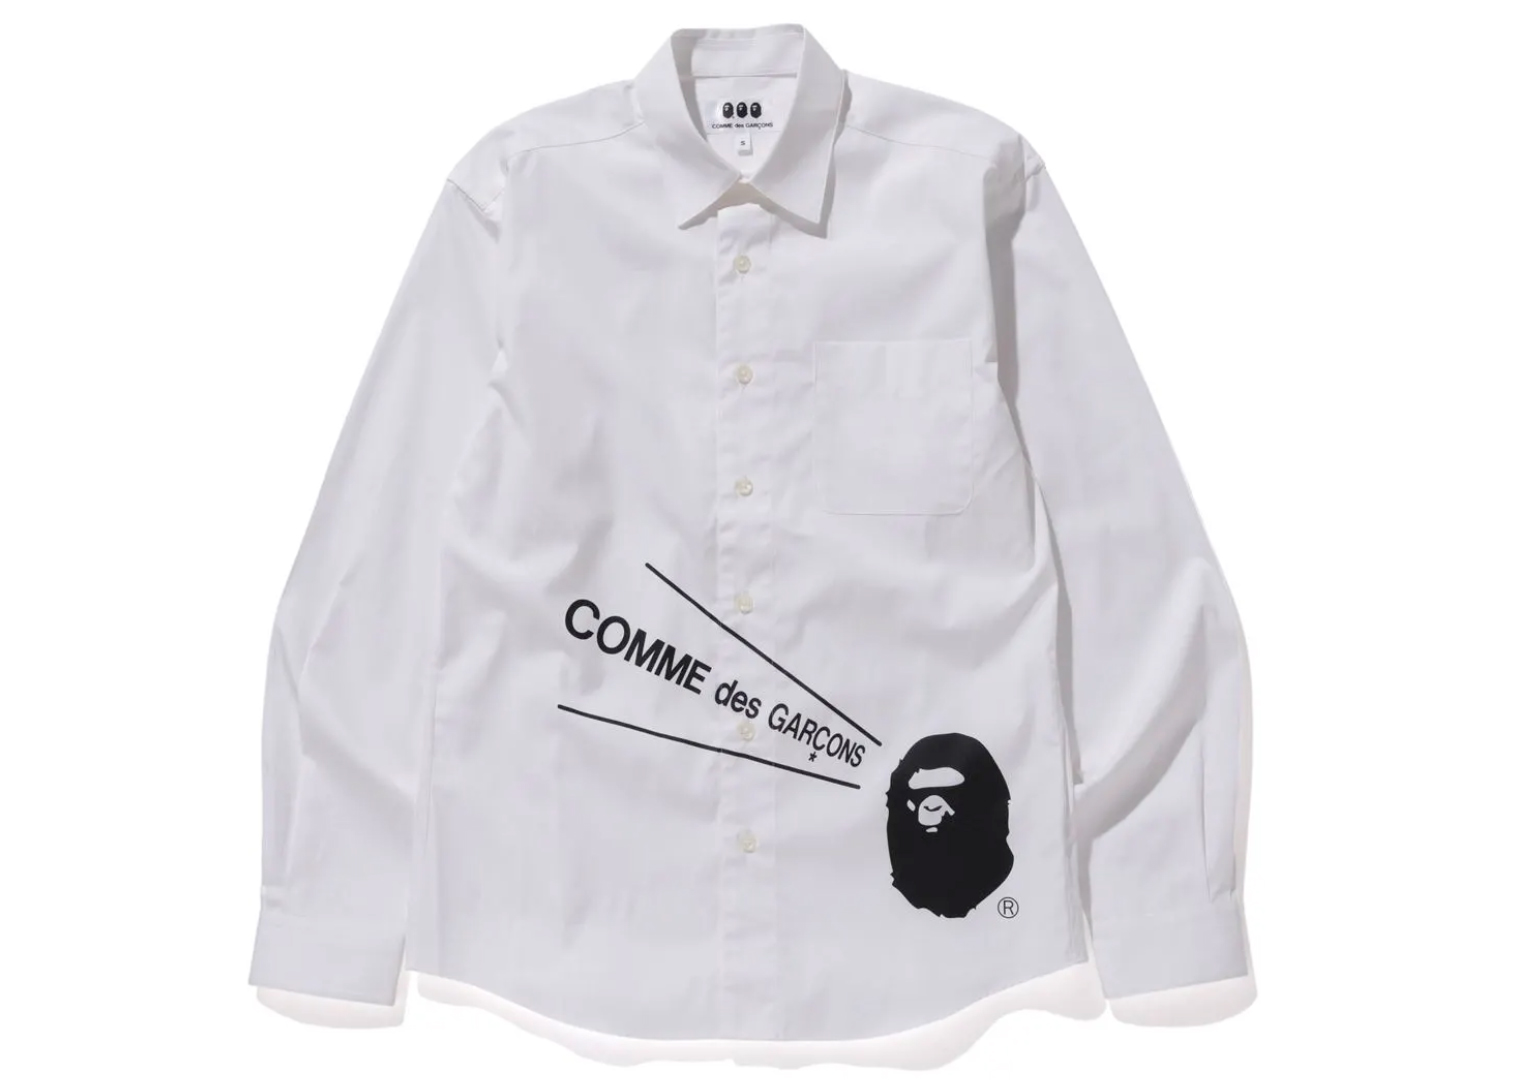 BAPE x CDG Osaka Shirt #2 White - FW20